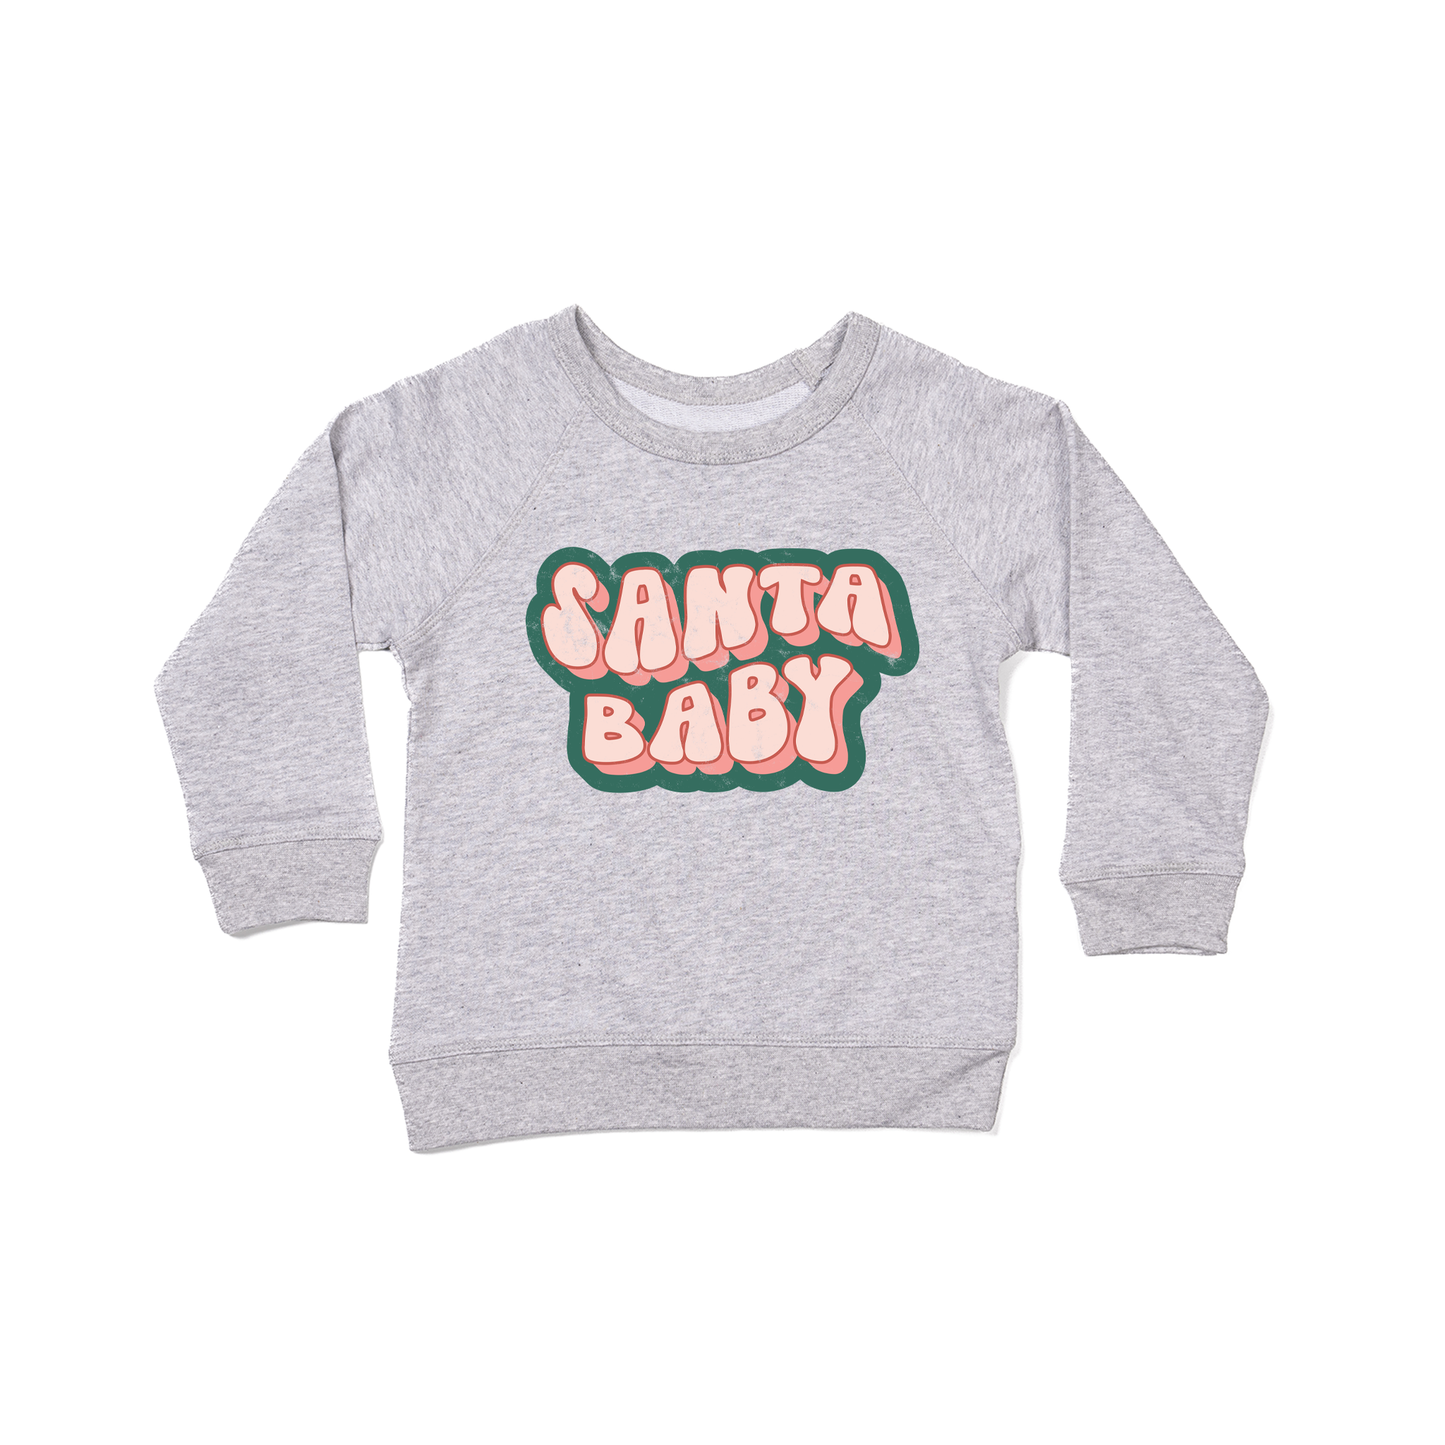 Santa Baby Vintage - Kids Sweatshirt (Heather Gray)